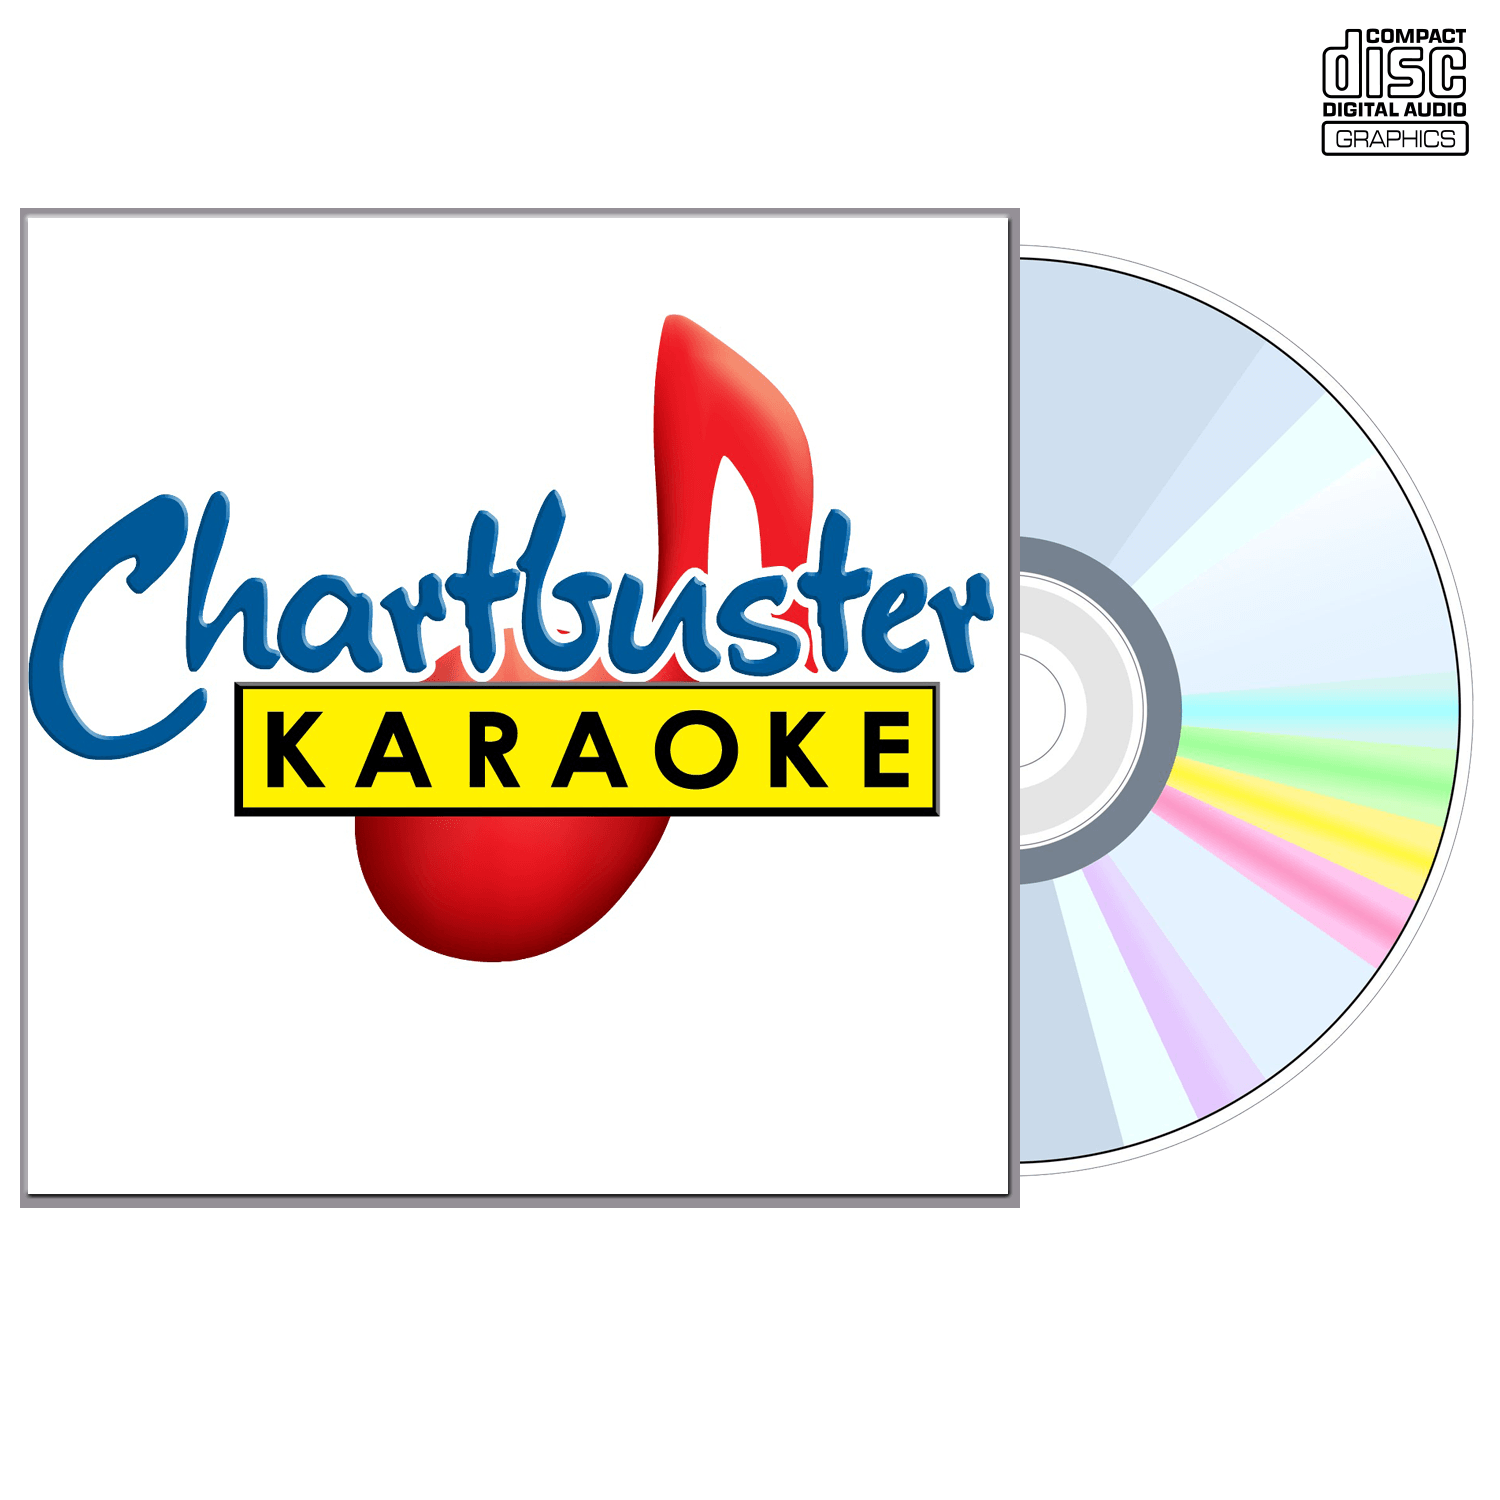 Best Of George Strait 80's - CD+G - Chartbuster Karaoke - Karaoke Home Entertainment